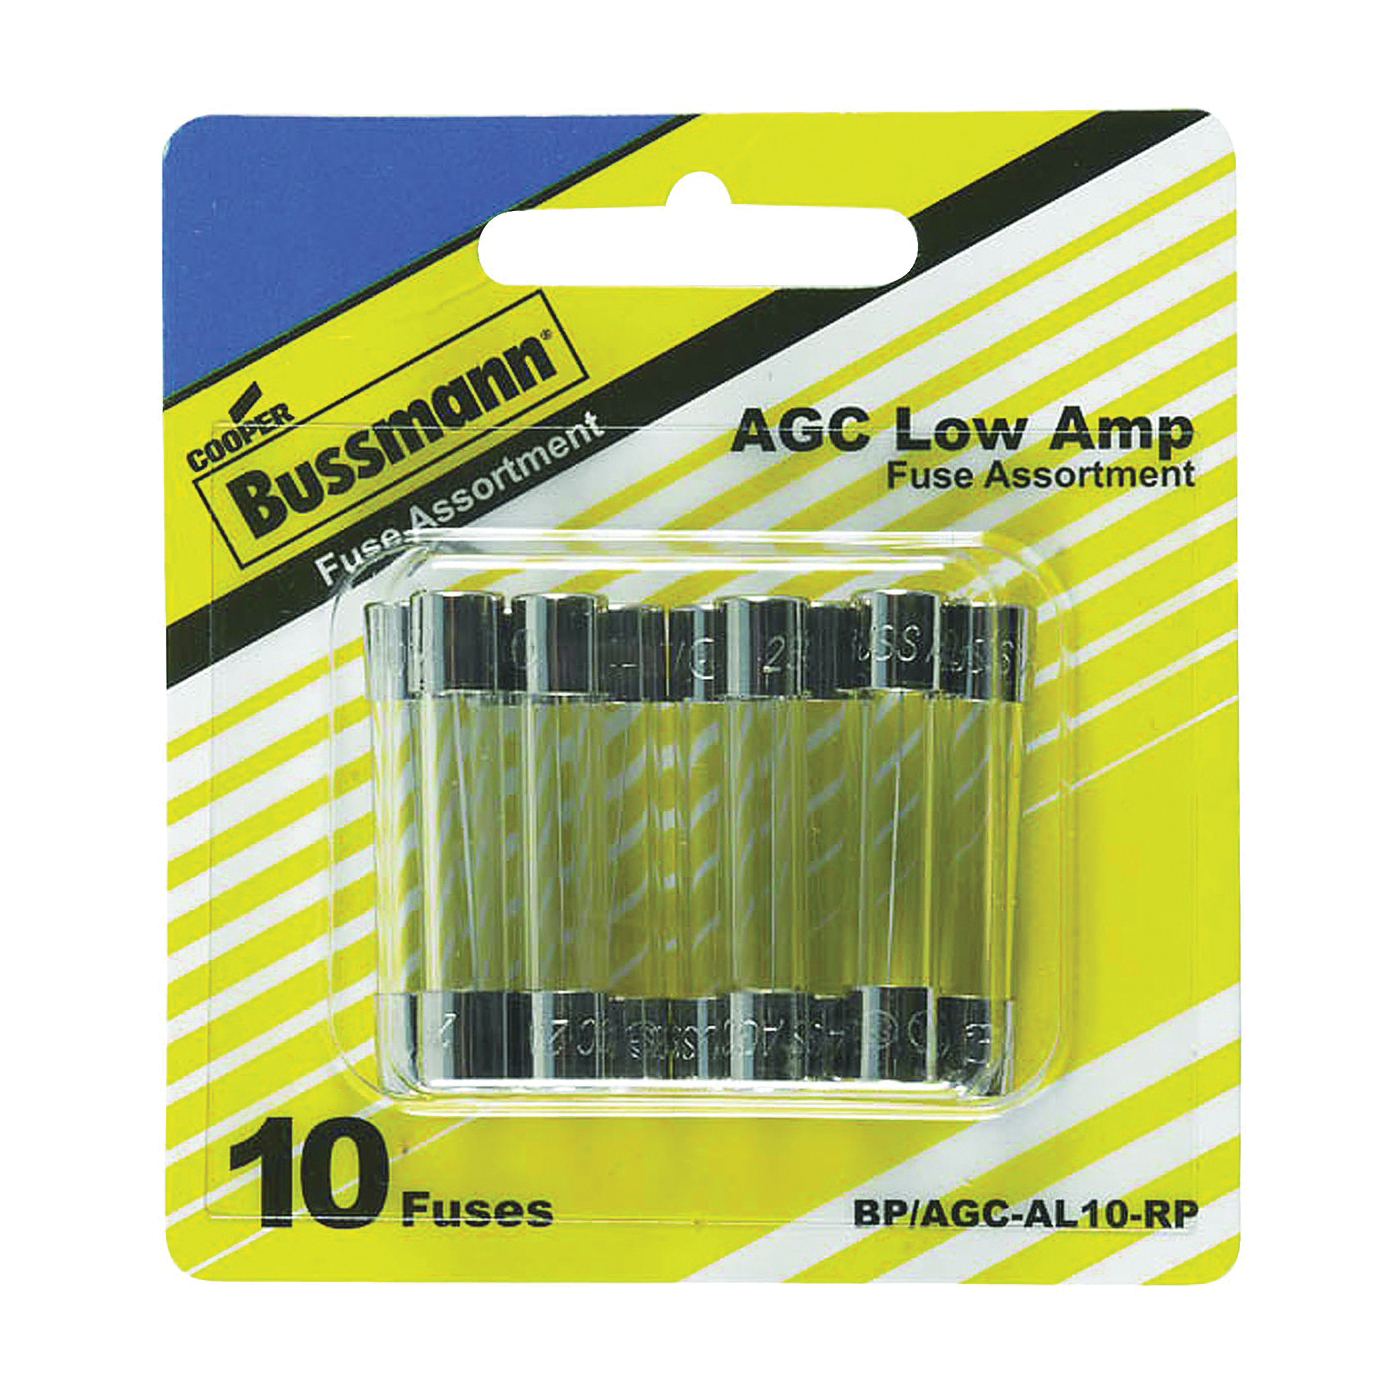 Bussmann BP/AGC-AL10-RP